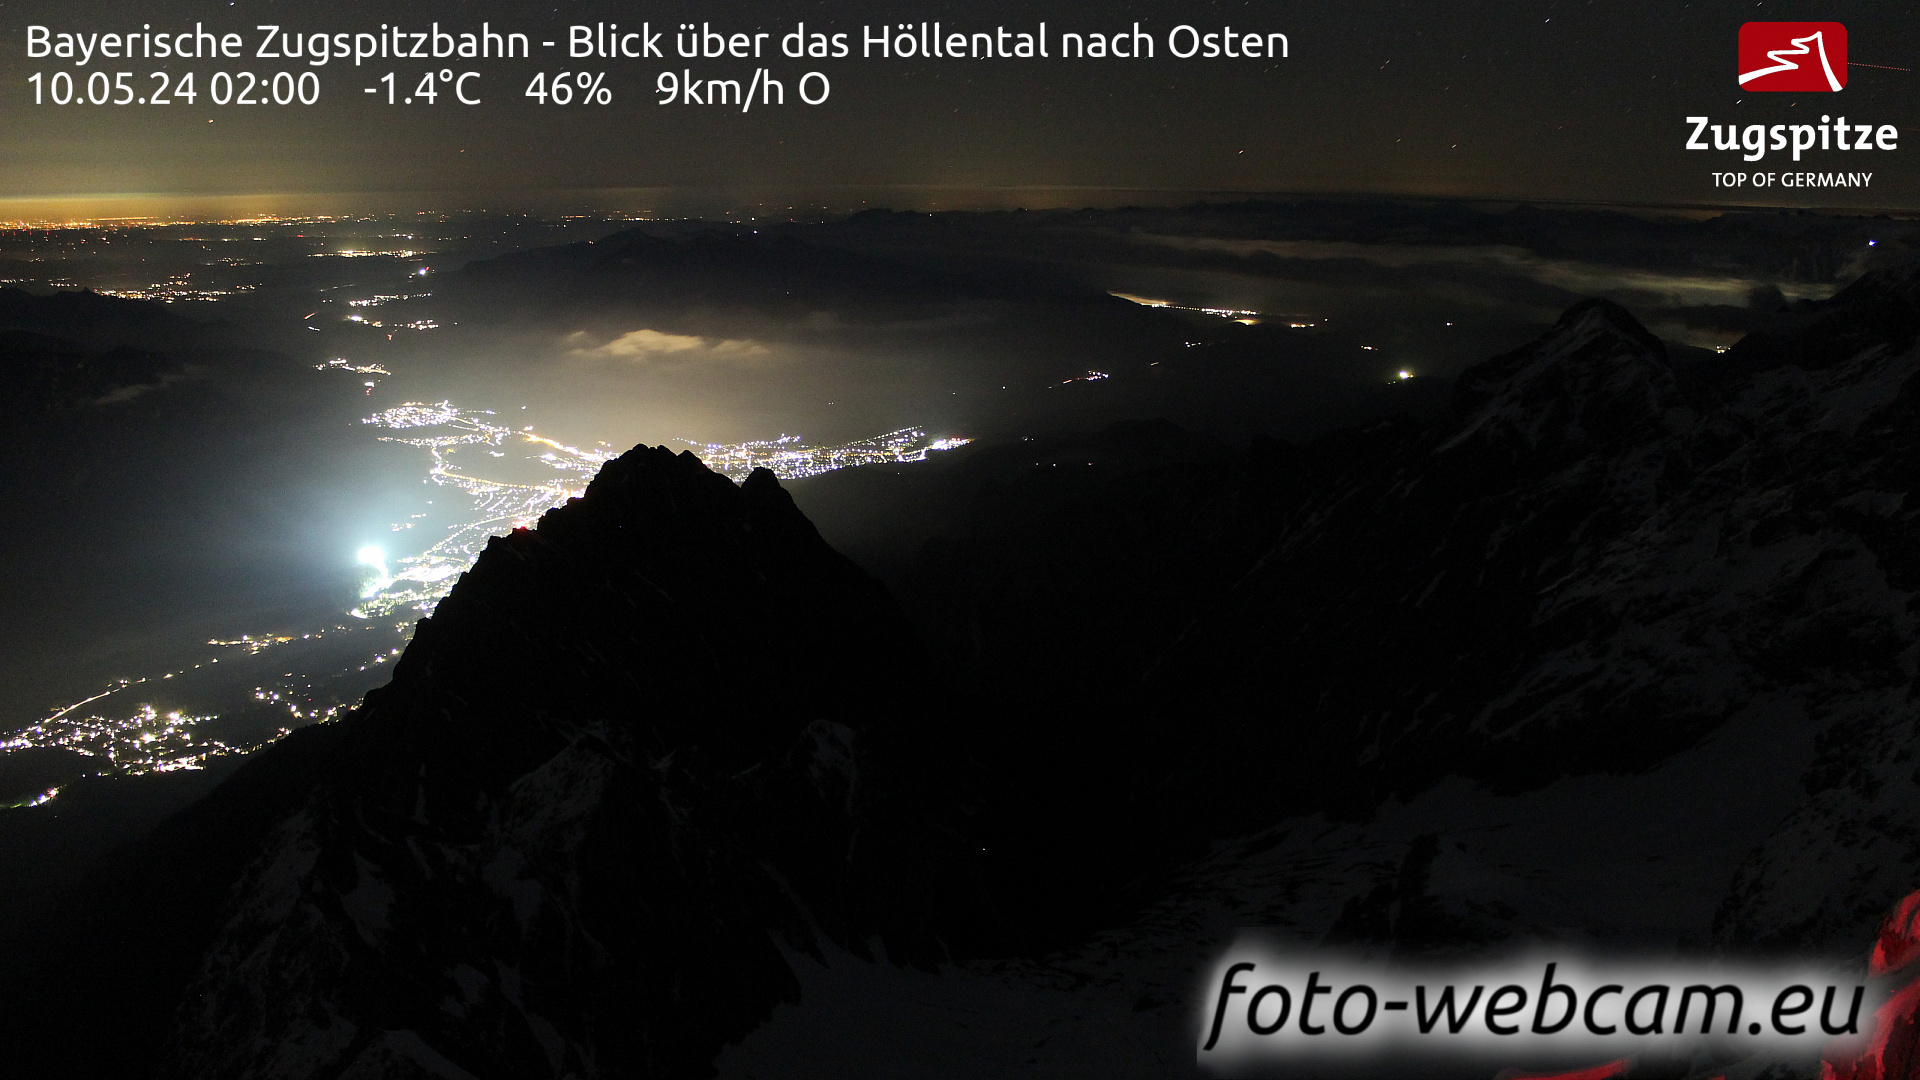 Zugspitze Ven. 02:05